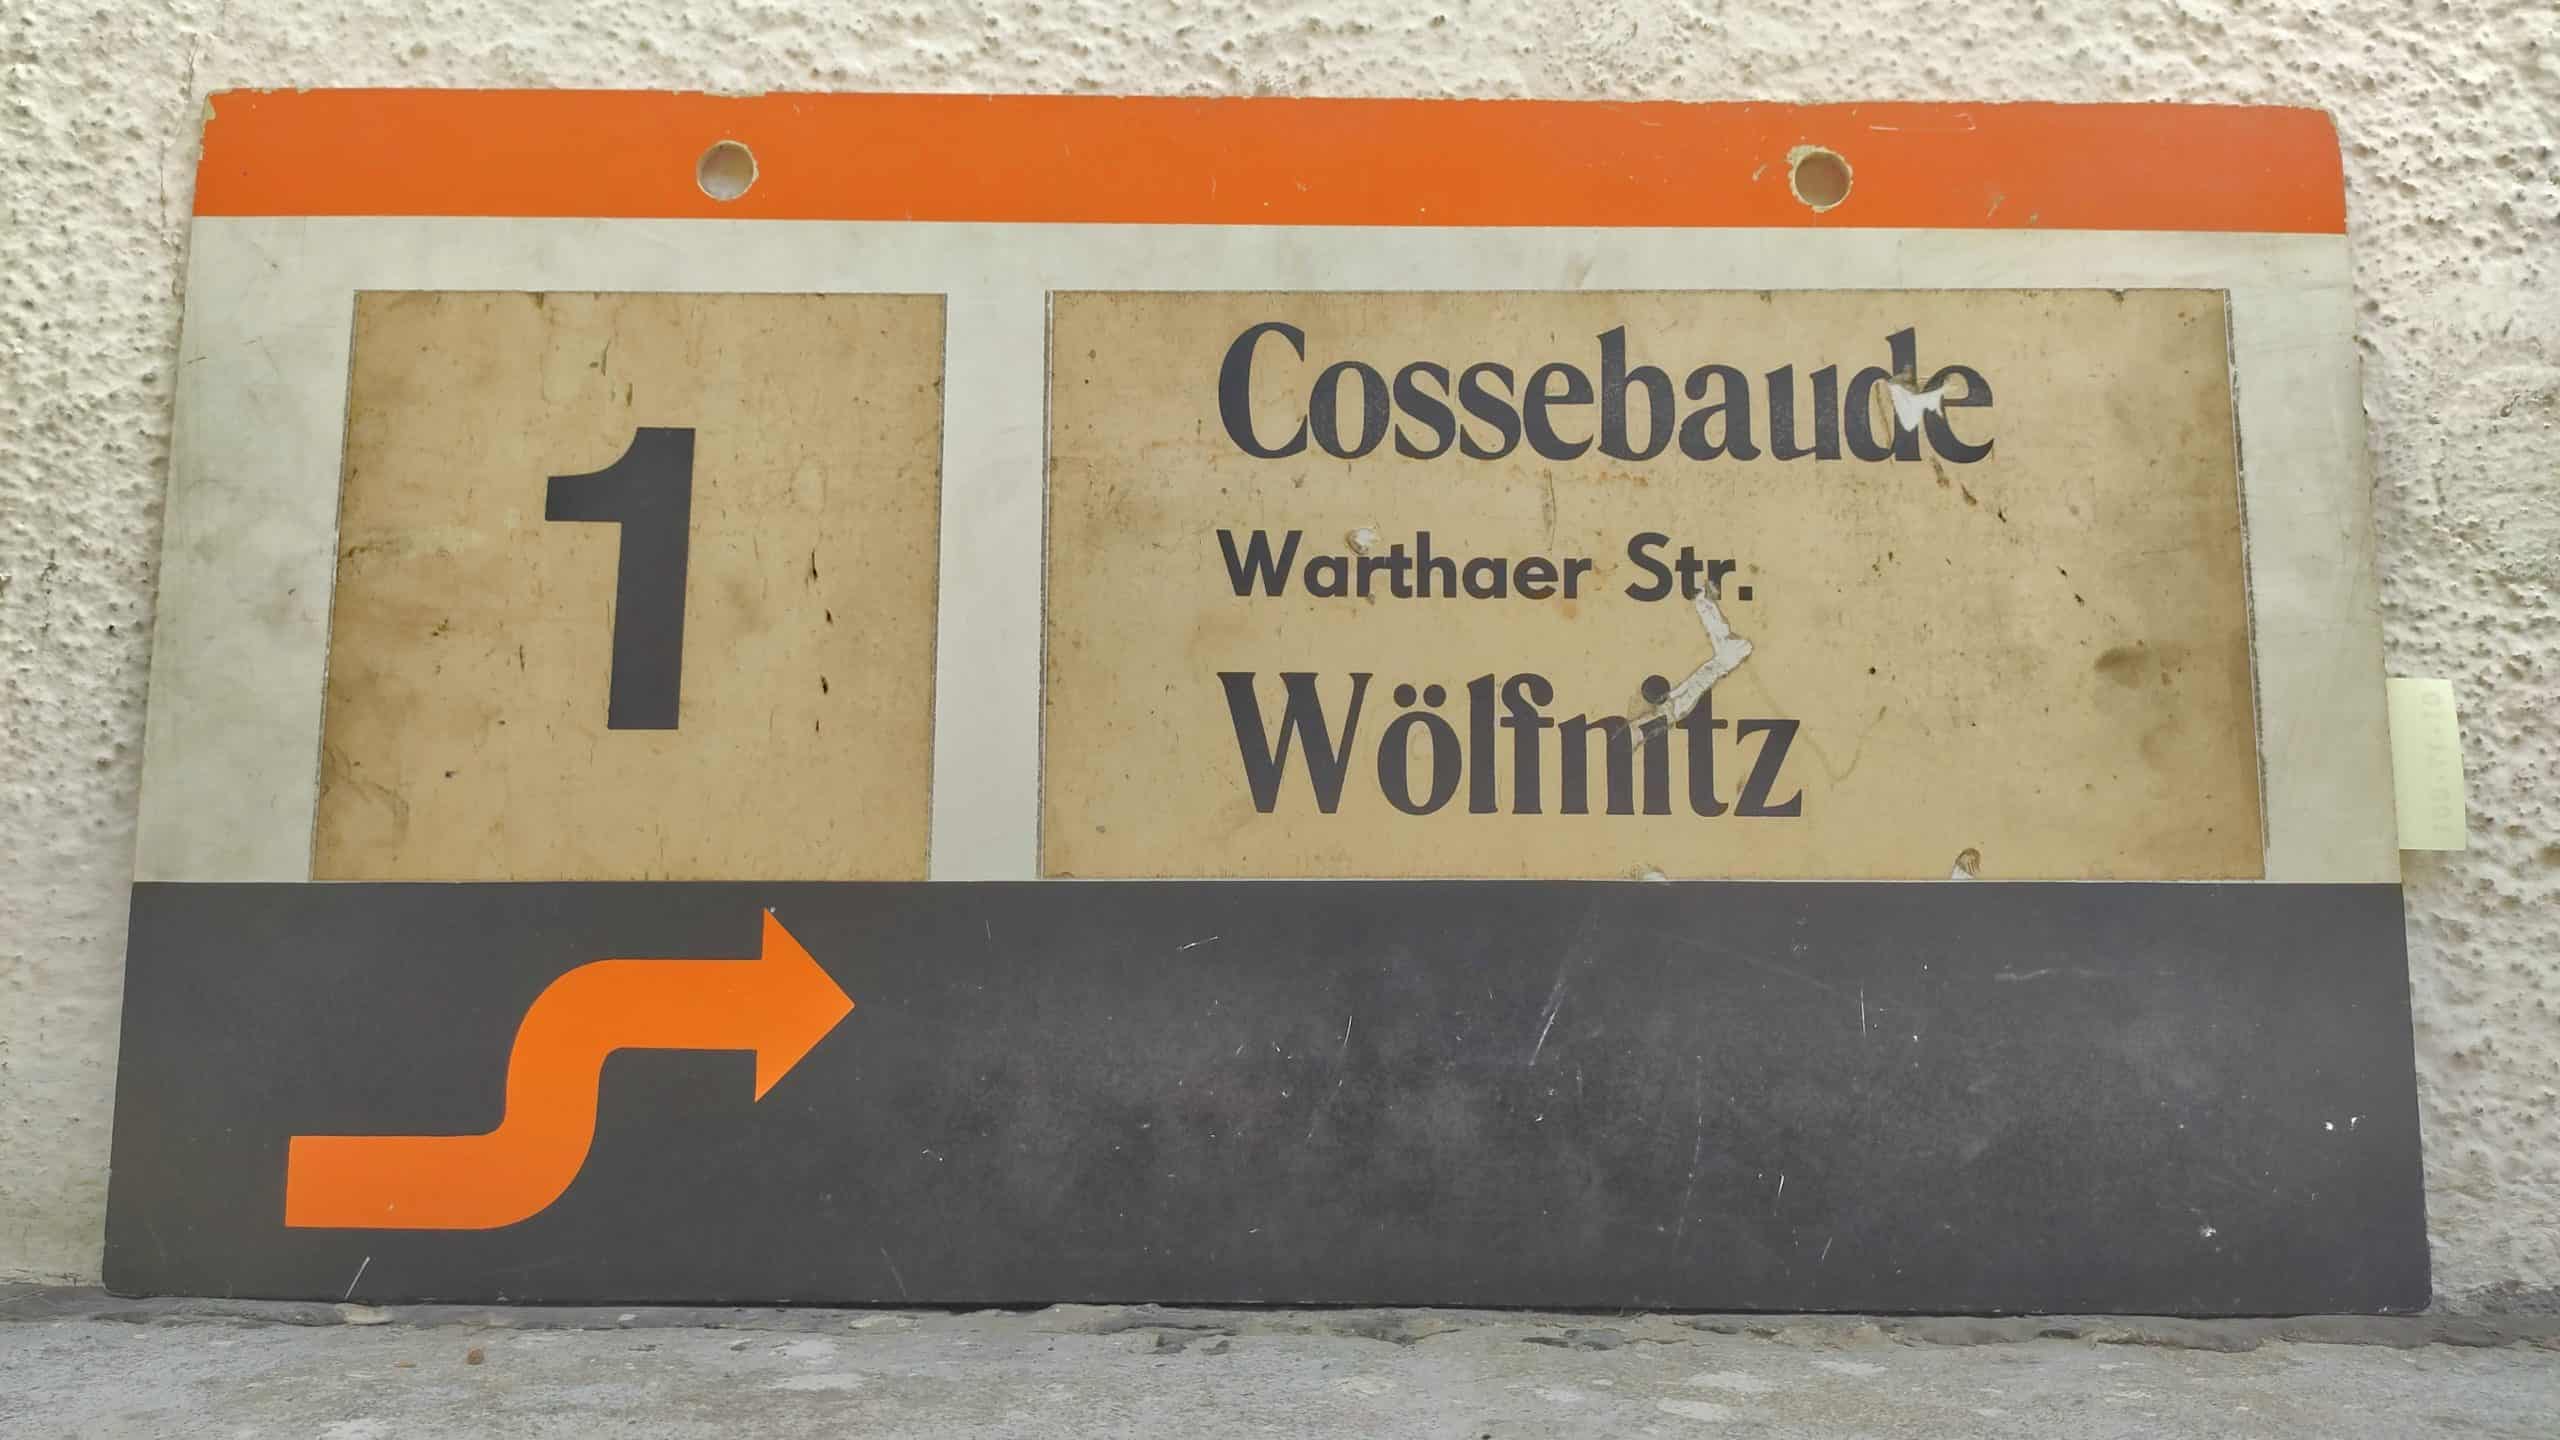 1 Cossebaude – Wölfnitz #2